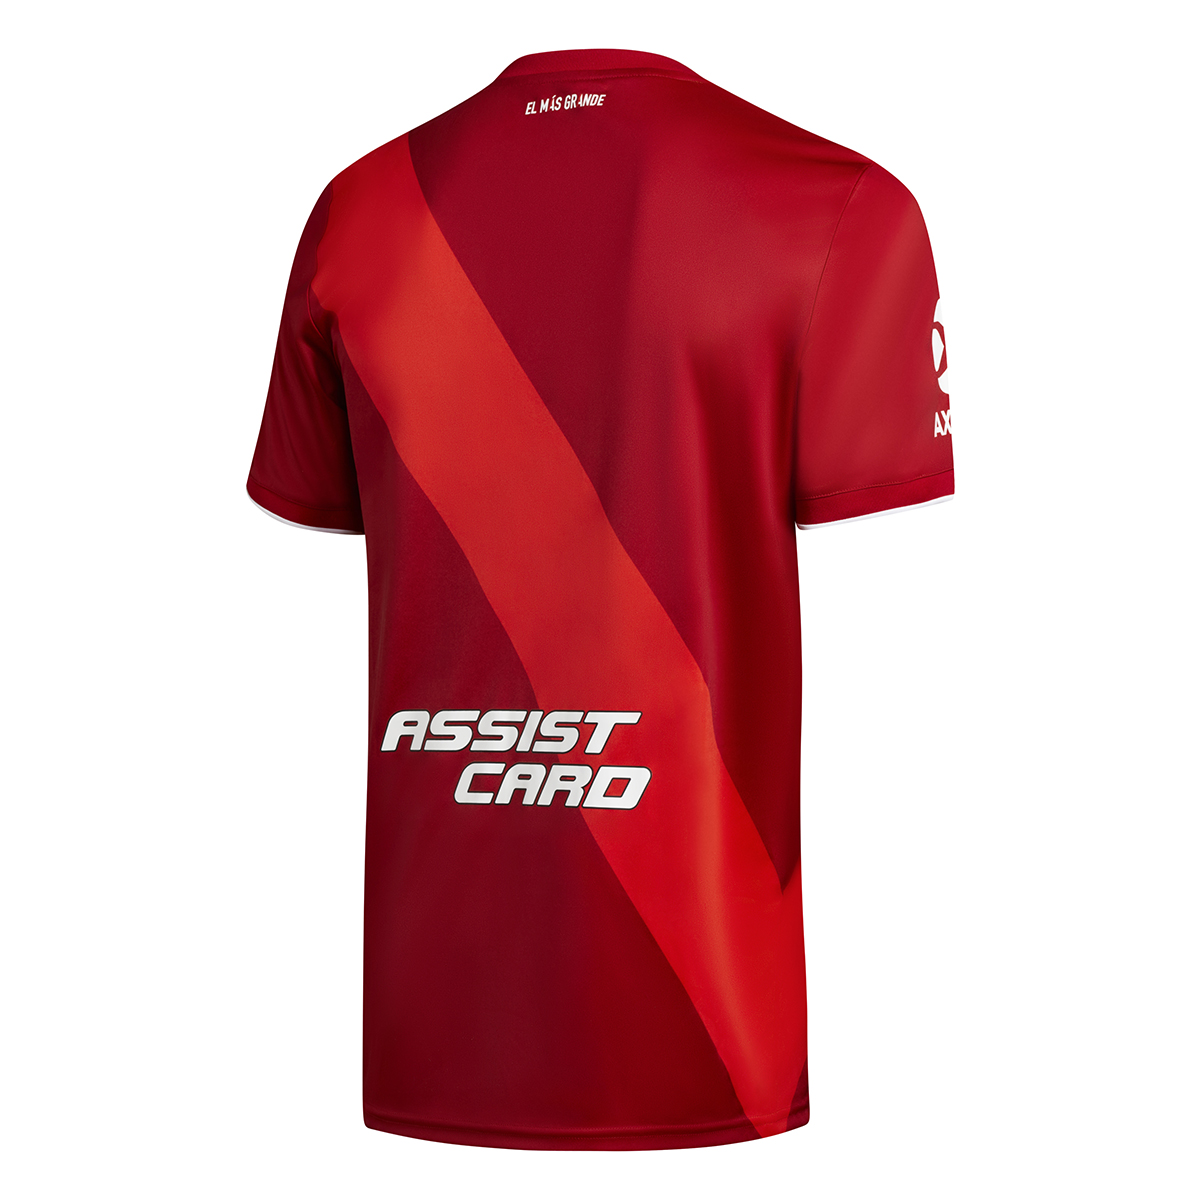 Camiseta adidas River Plate Alternativa 2020/21,  image number null